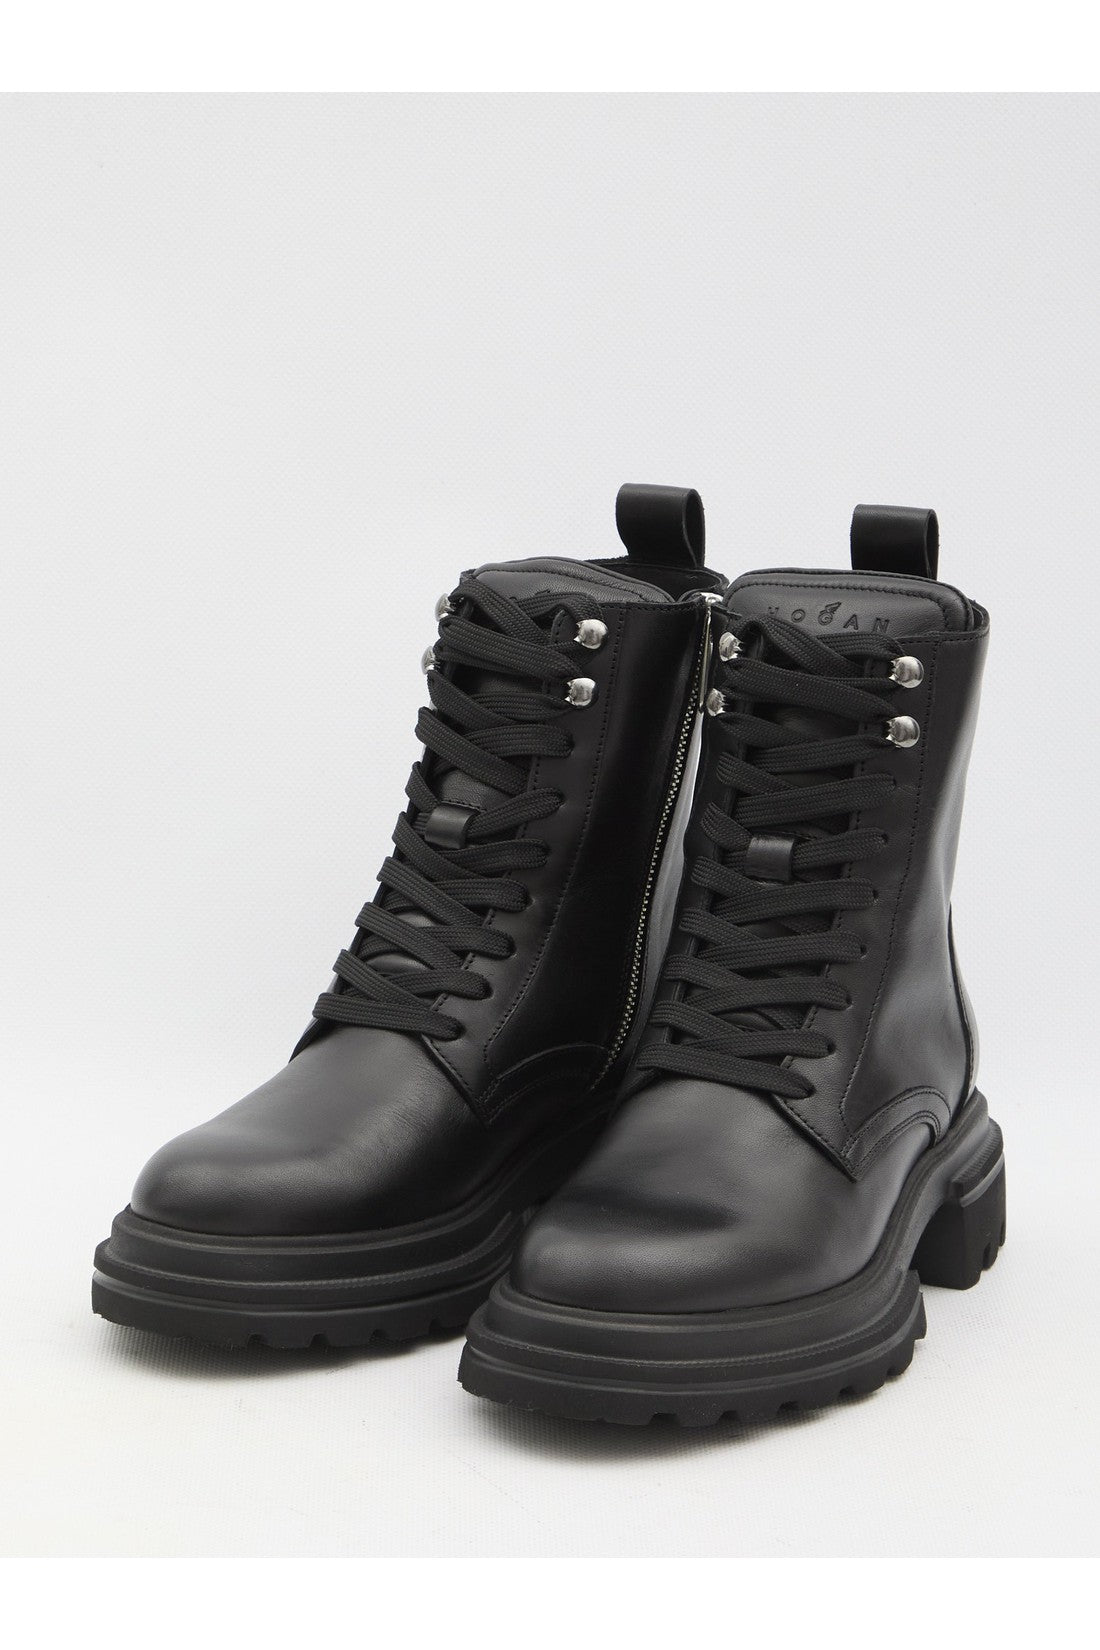 H674 combat boots